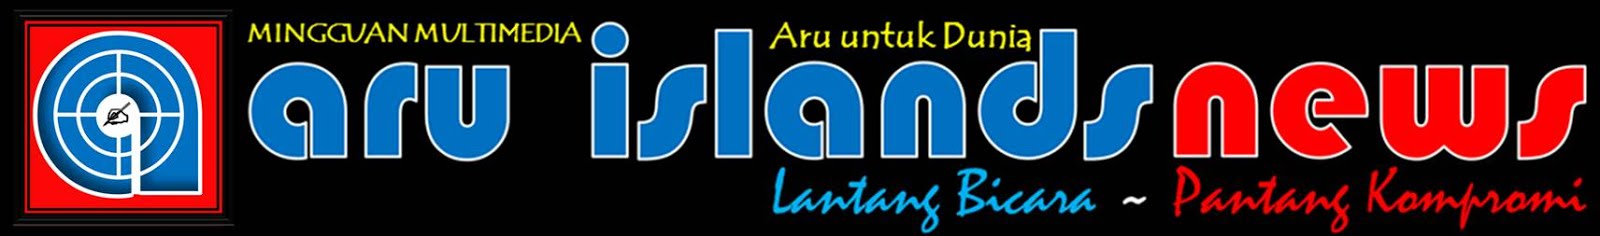 Aru Islands News